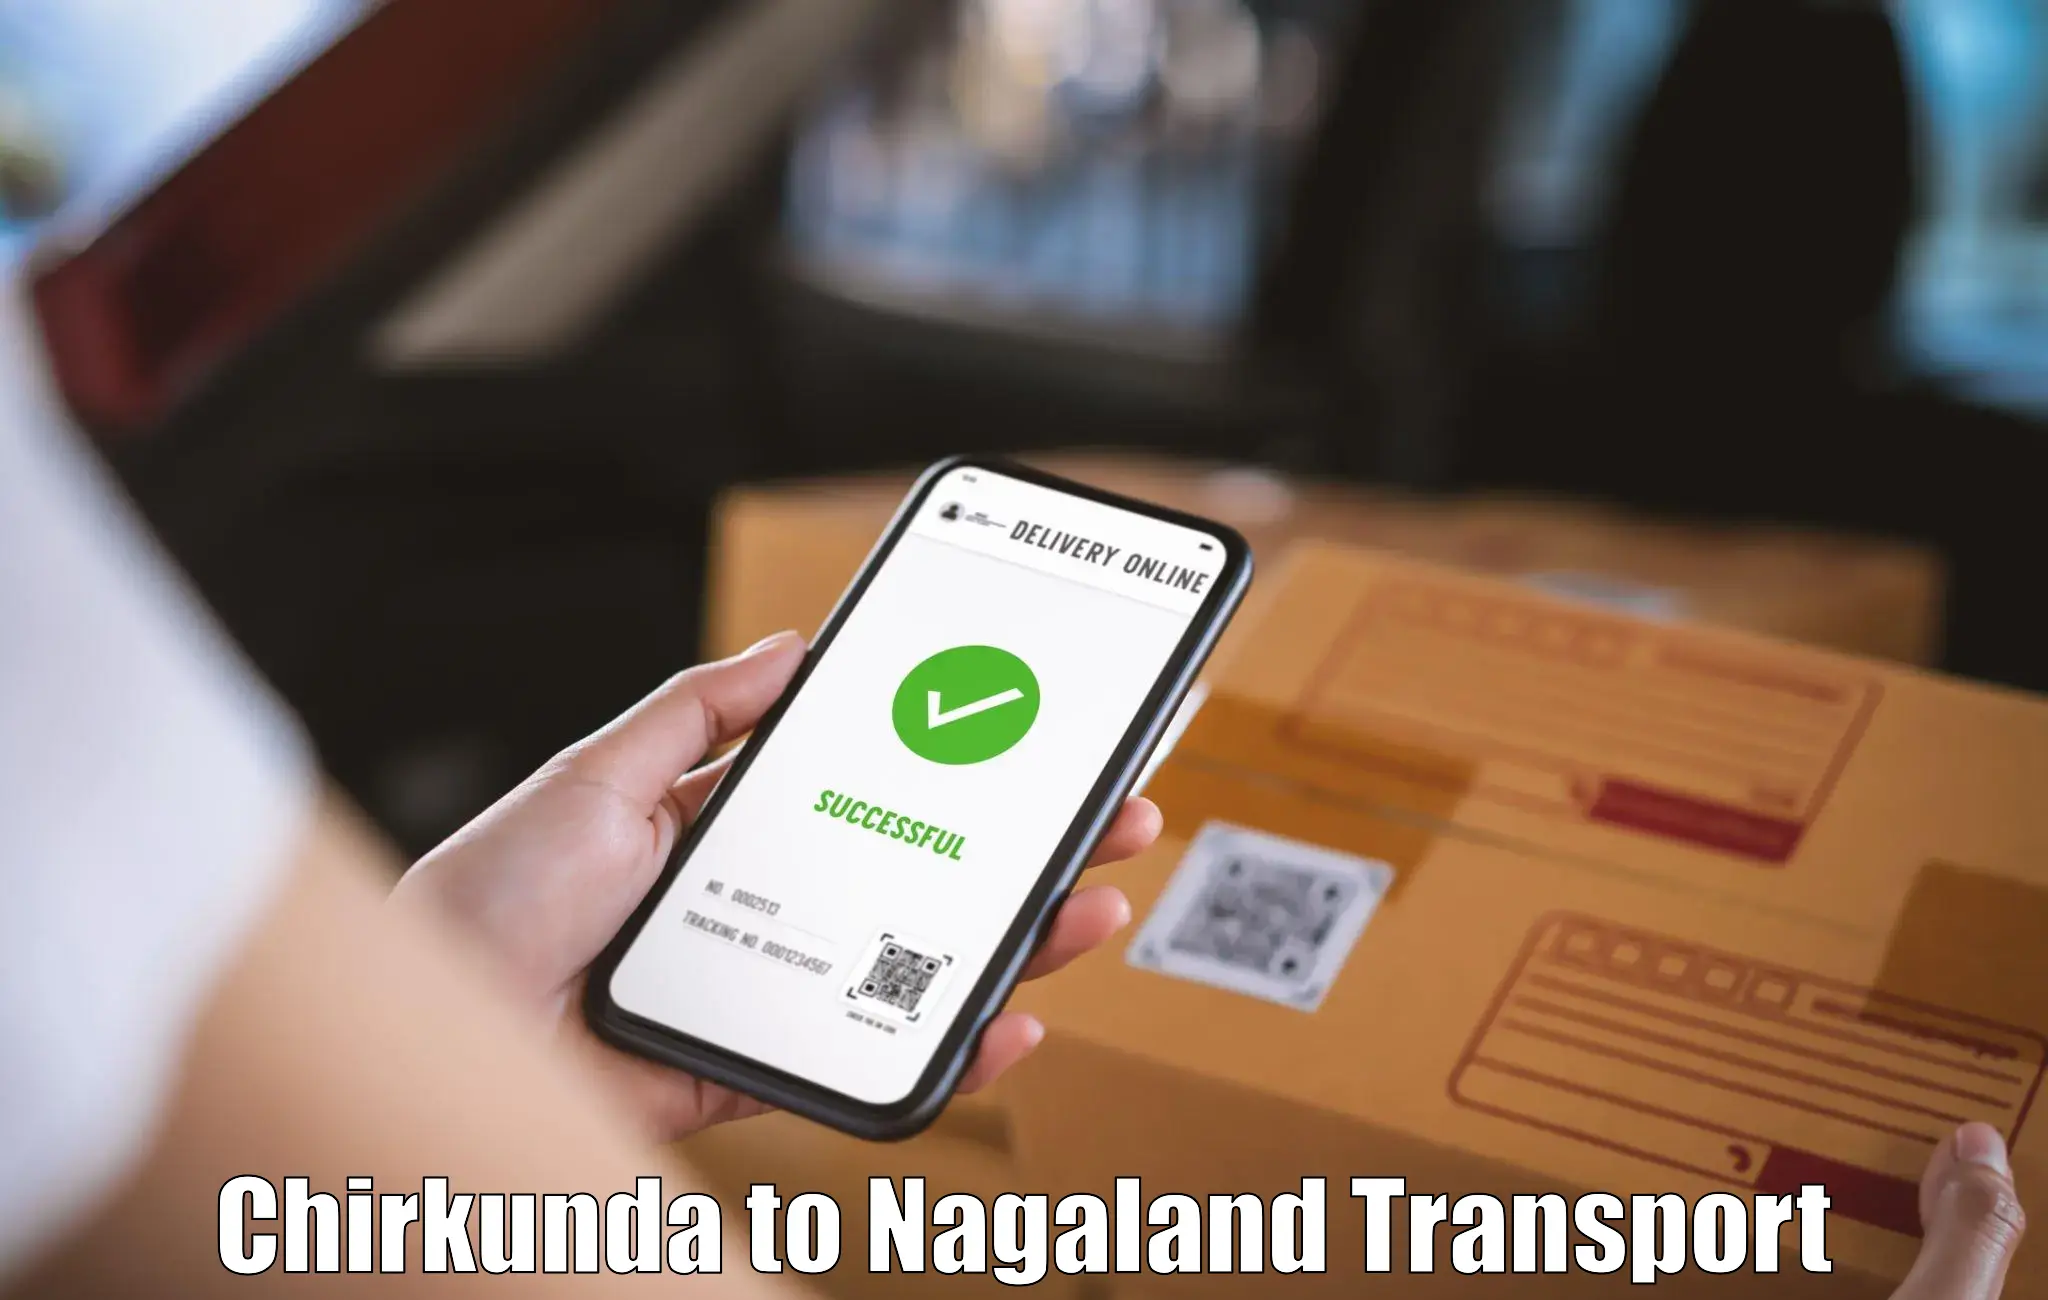 Transport in sharing Chirkunda to Nagaland